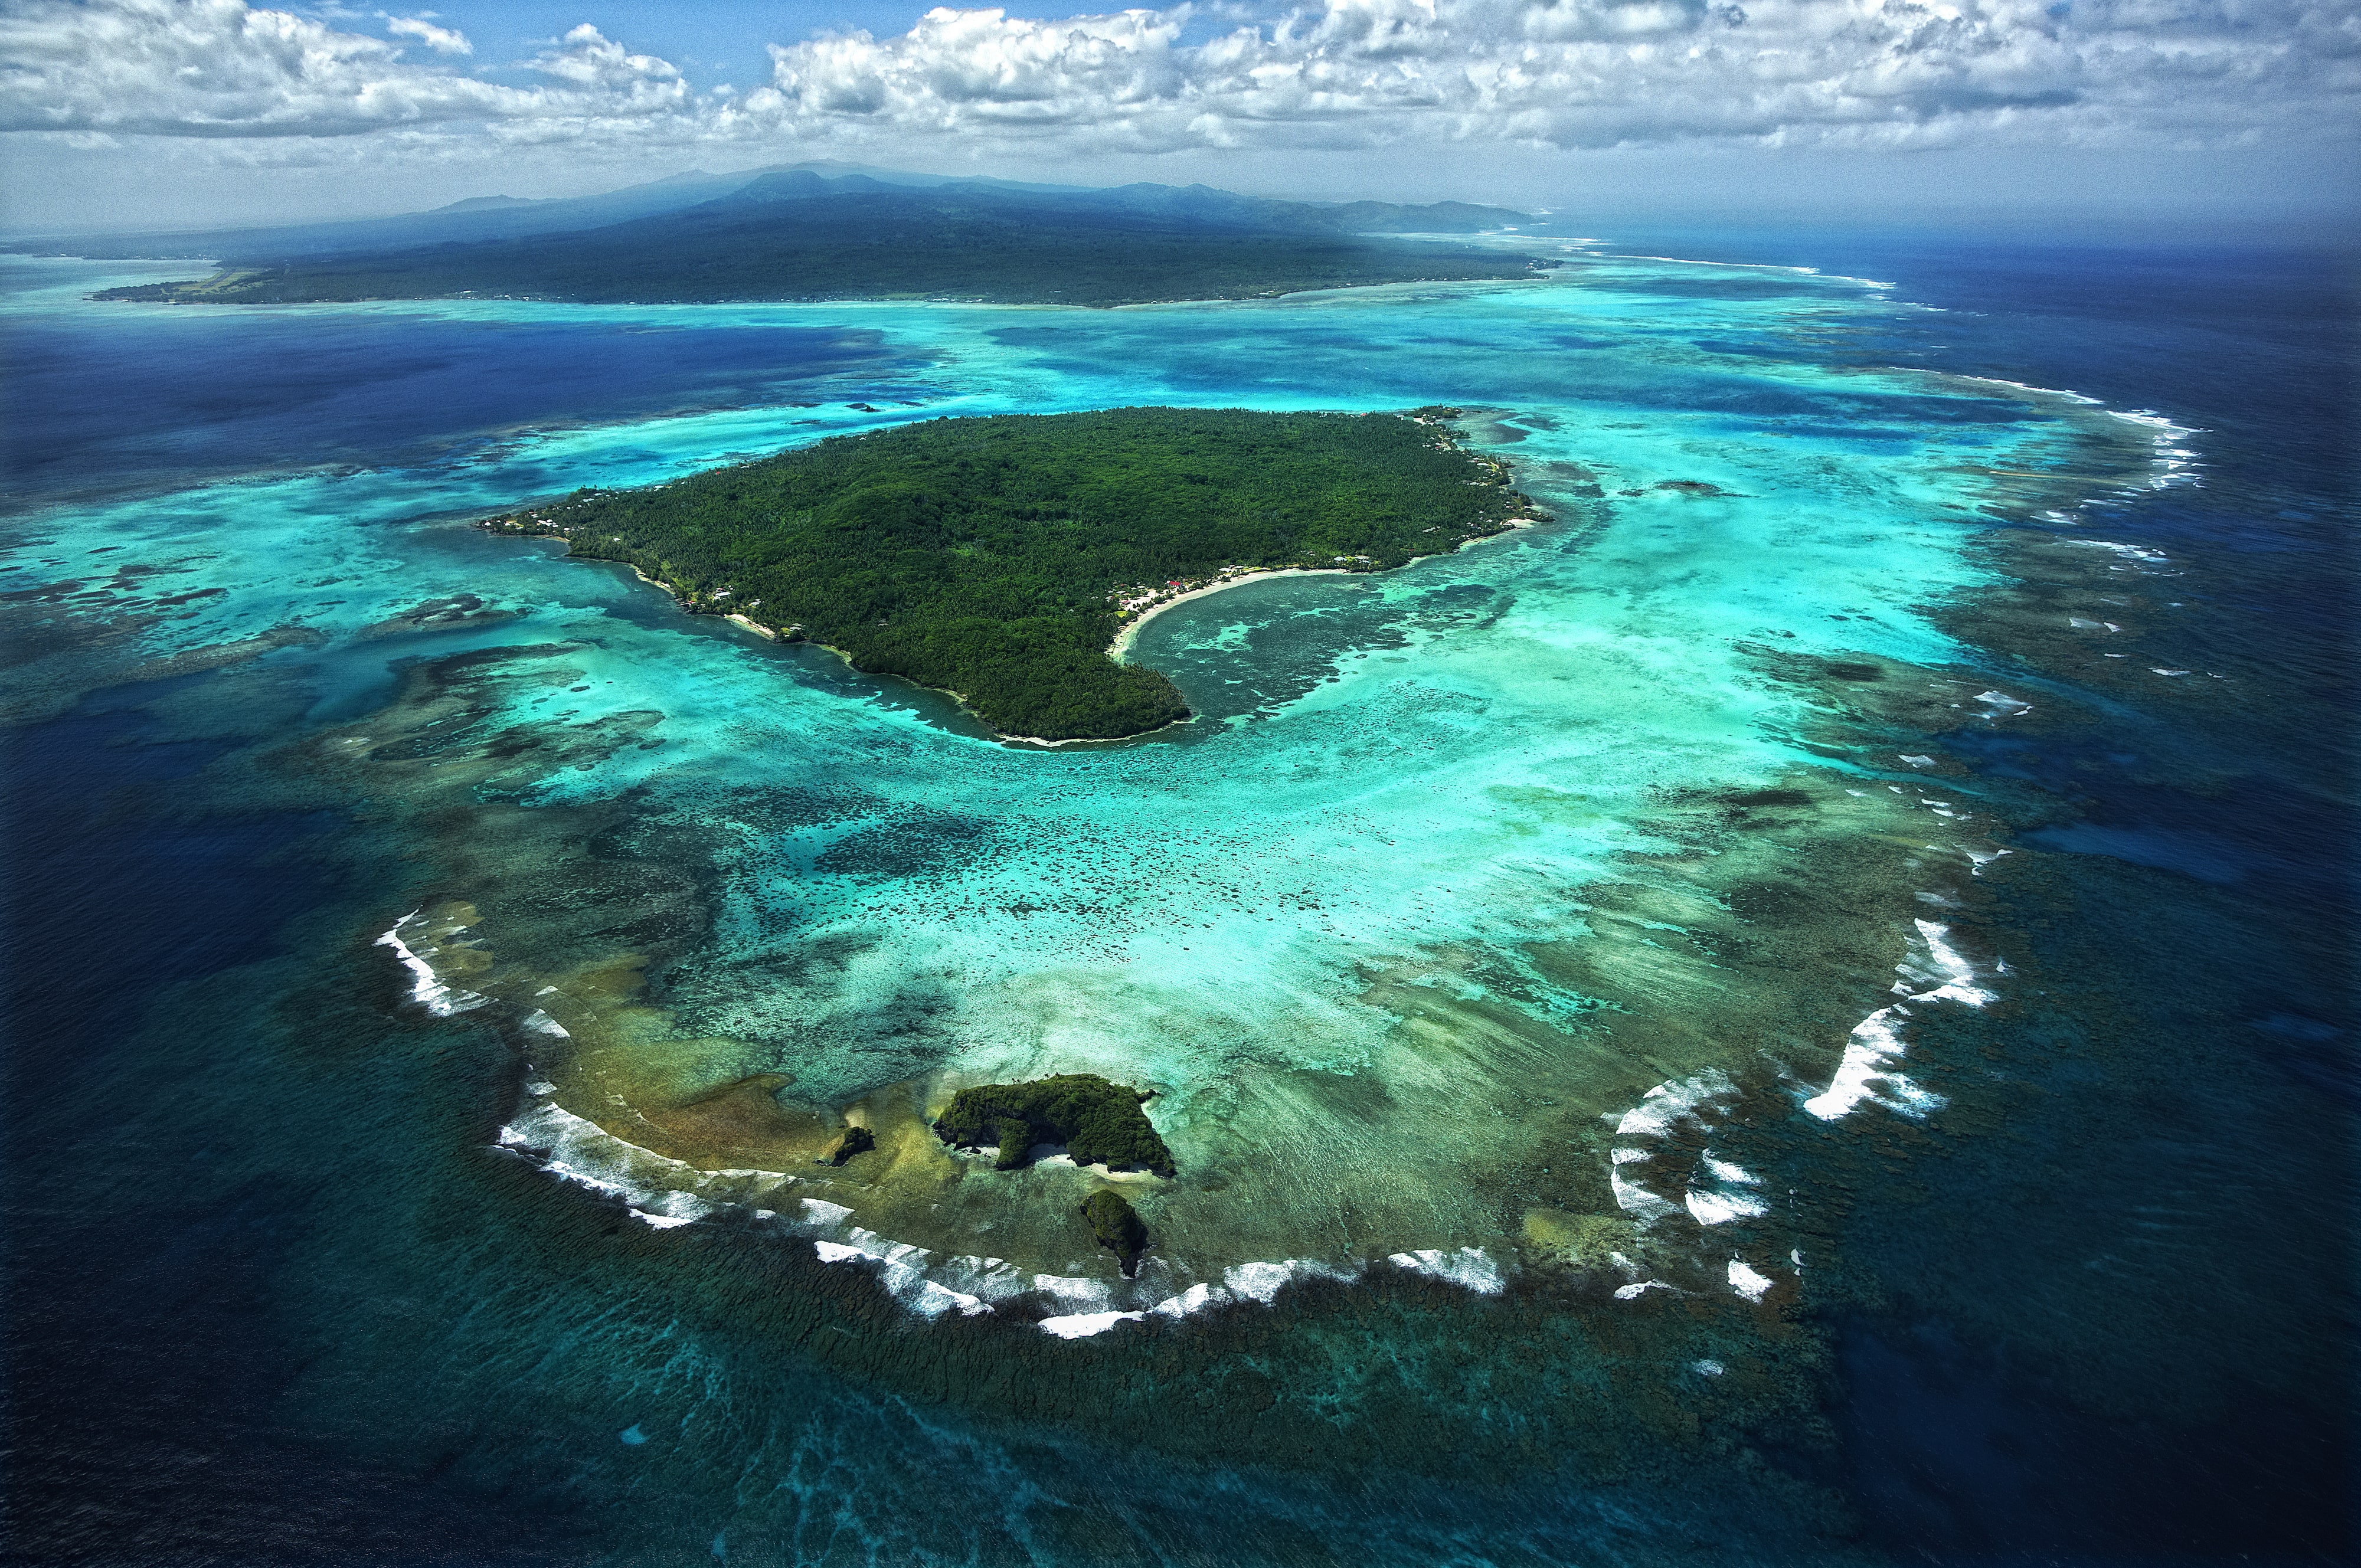 Острова южного тихого океана. Уполу Самоа. Самоа остров. Архипелаг Самоа, остров Уполу. Тихий океан Самоа.